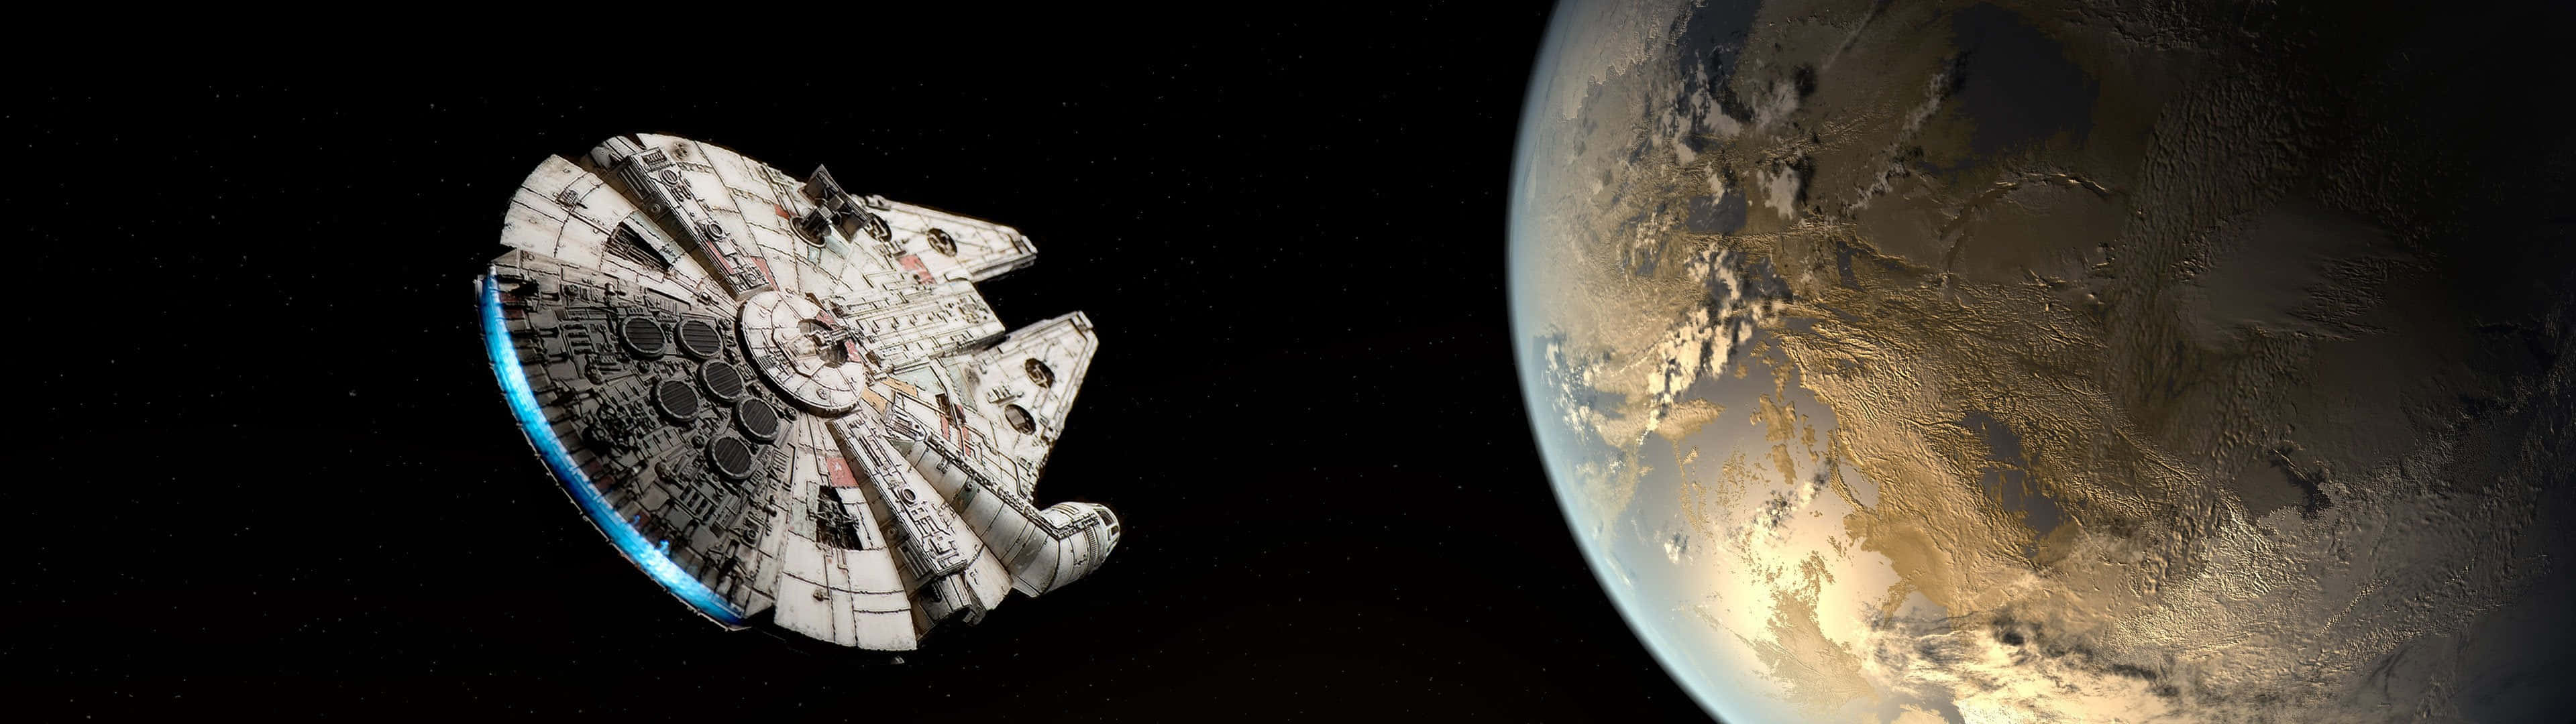 Det ikoniske Millenium Falcon fra Star Wars. Wallpaper